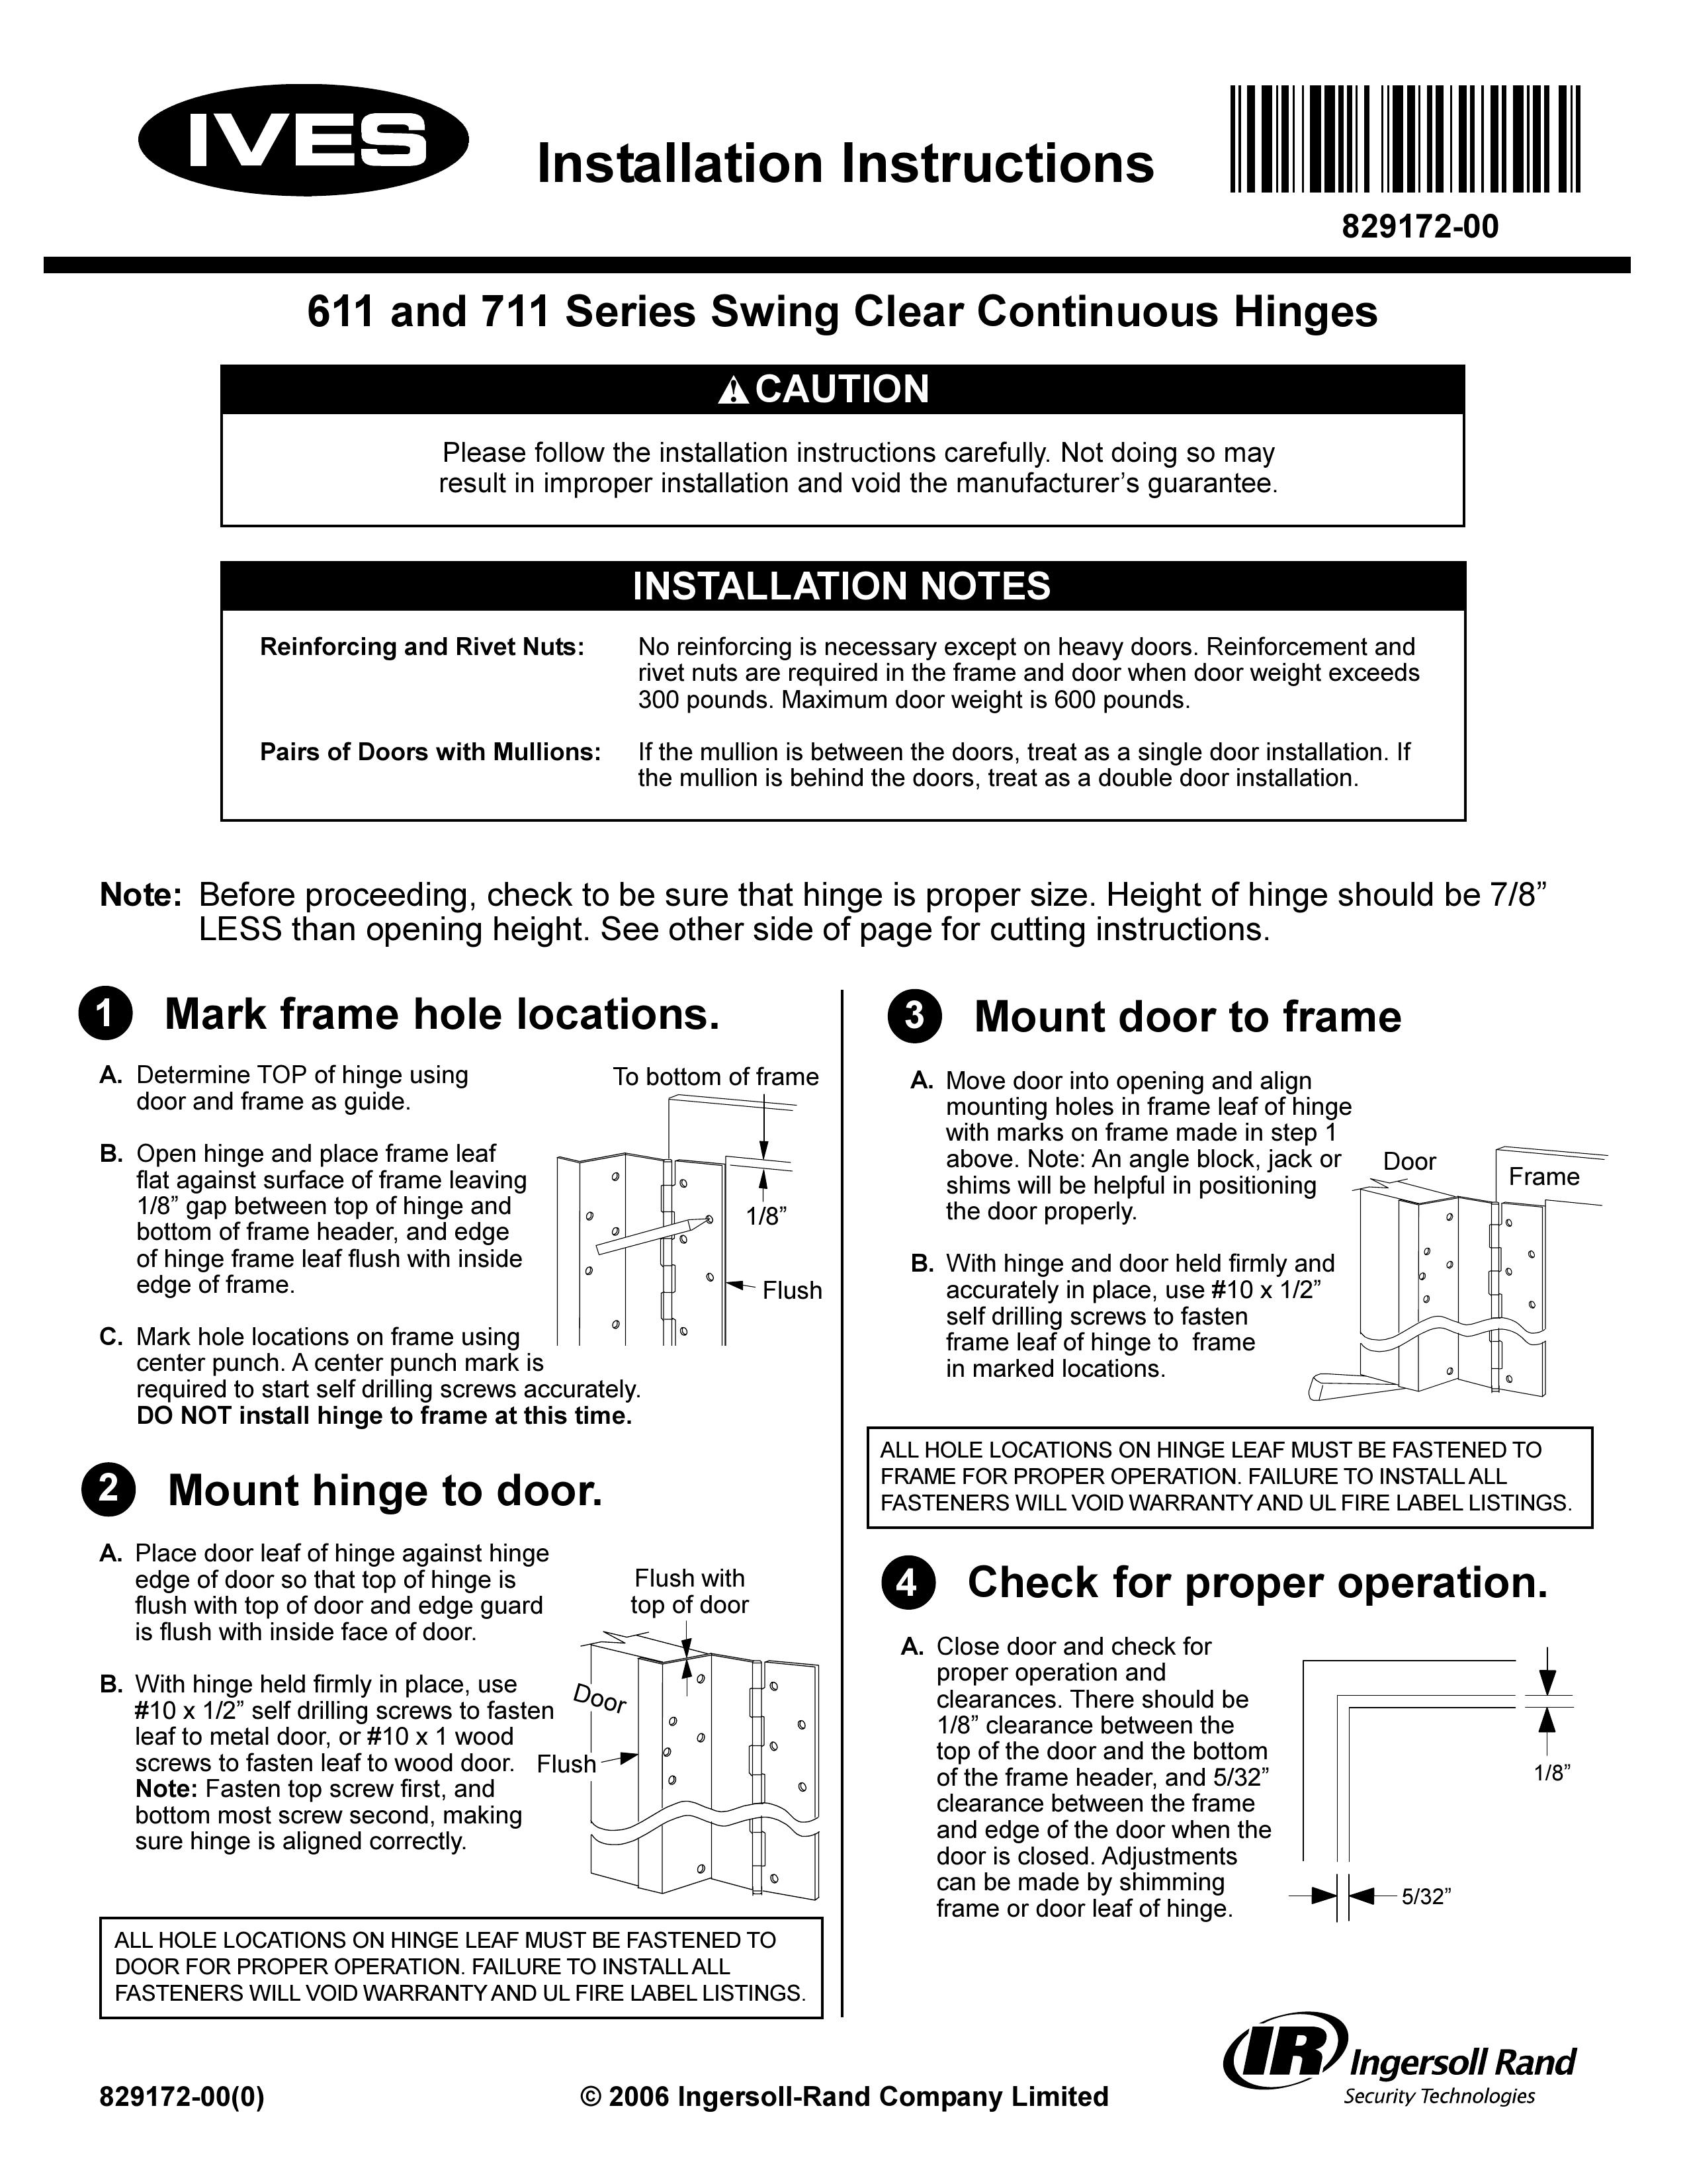 Ives 711 Series Swing Sets User Manual